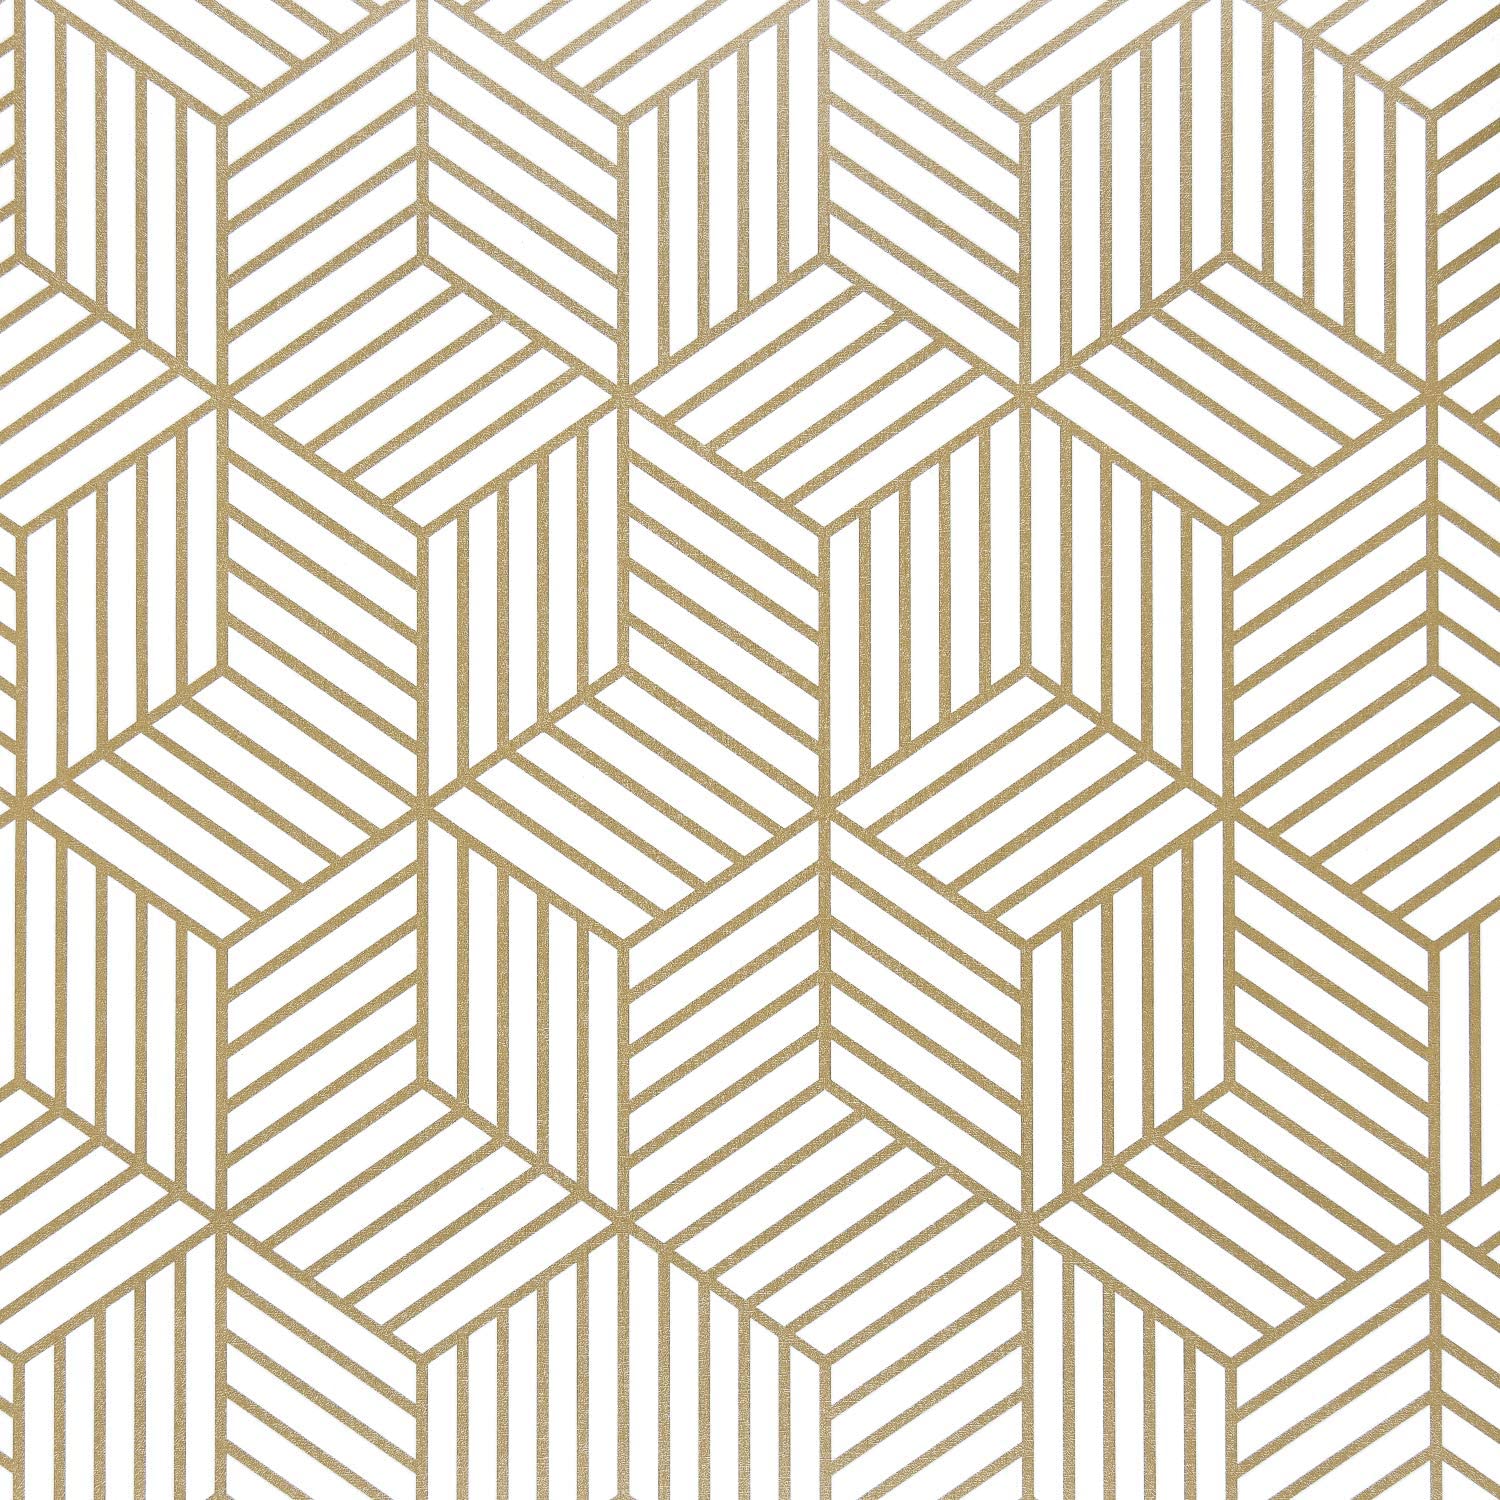 WENMER Geometric Pattern Vinyl Peelable Wallpaper